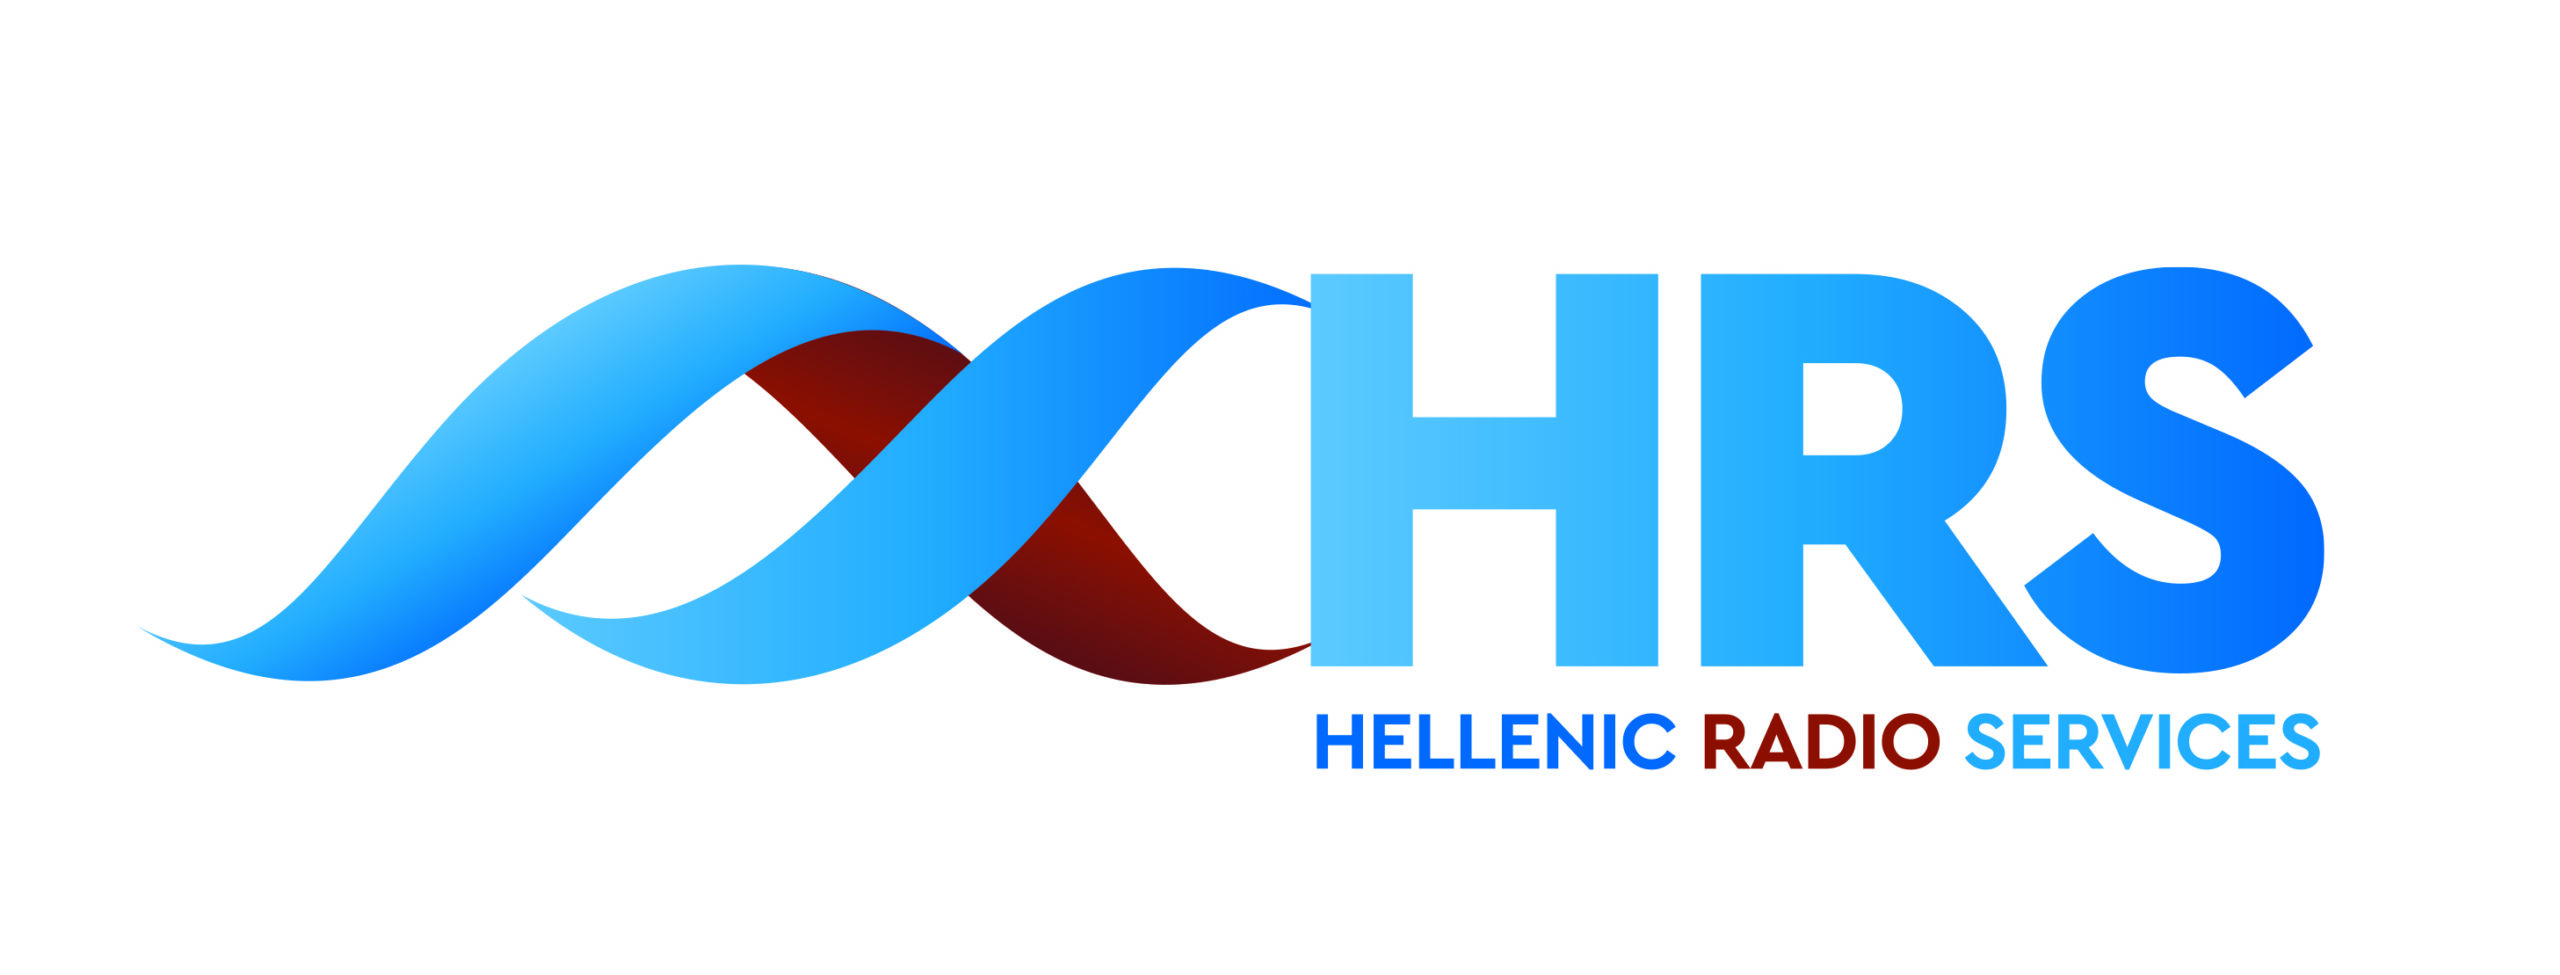 Hellenic Radio Electric Services Ltd